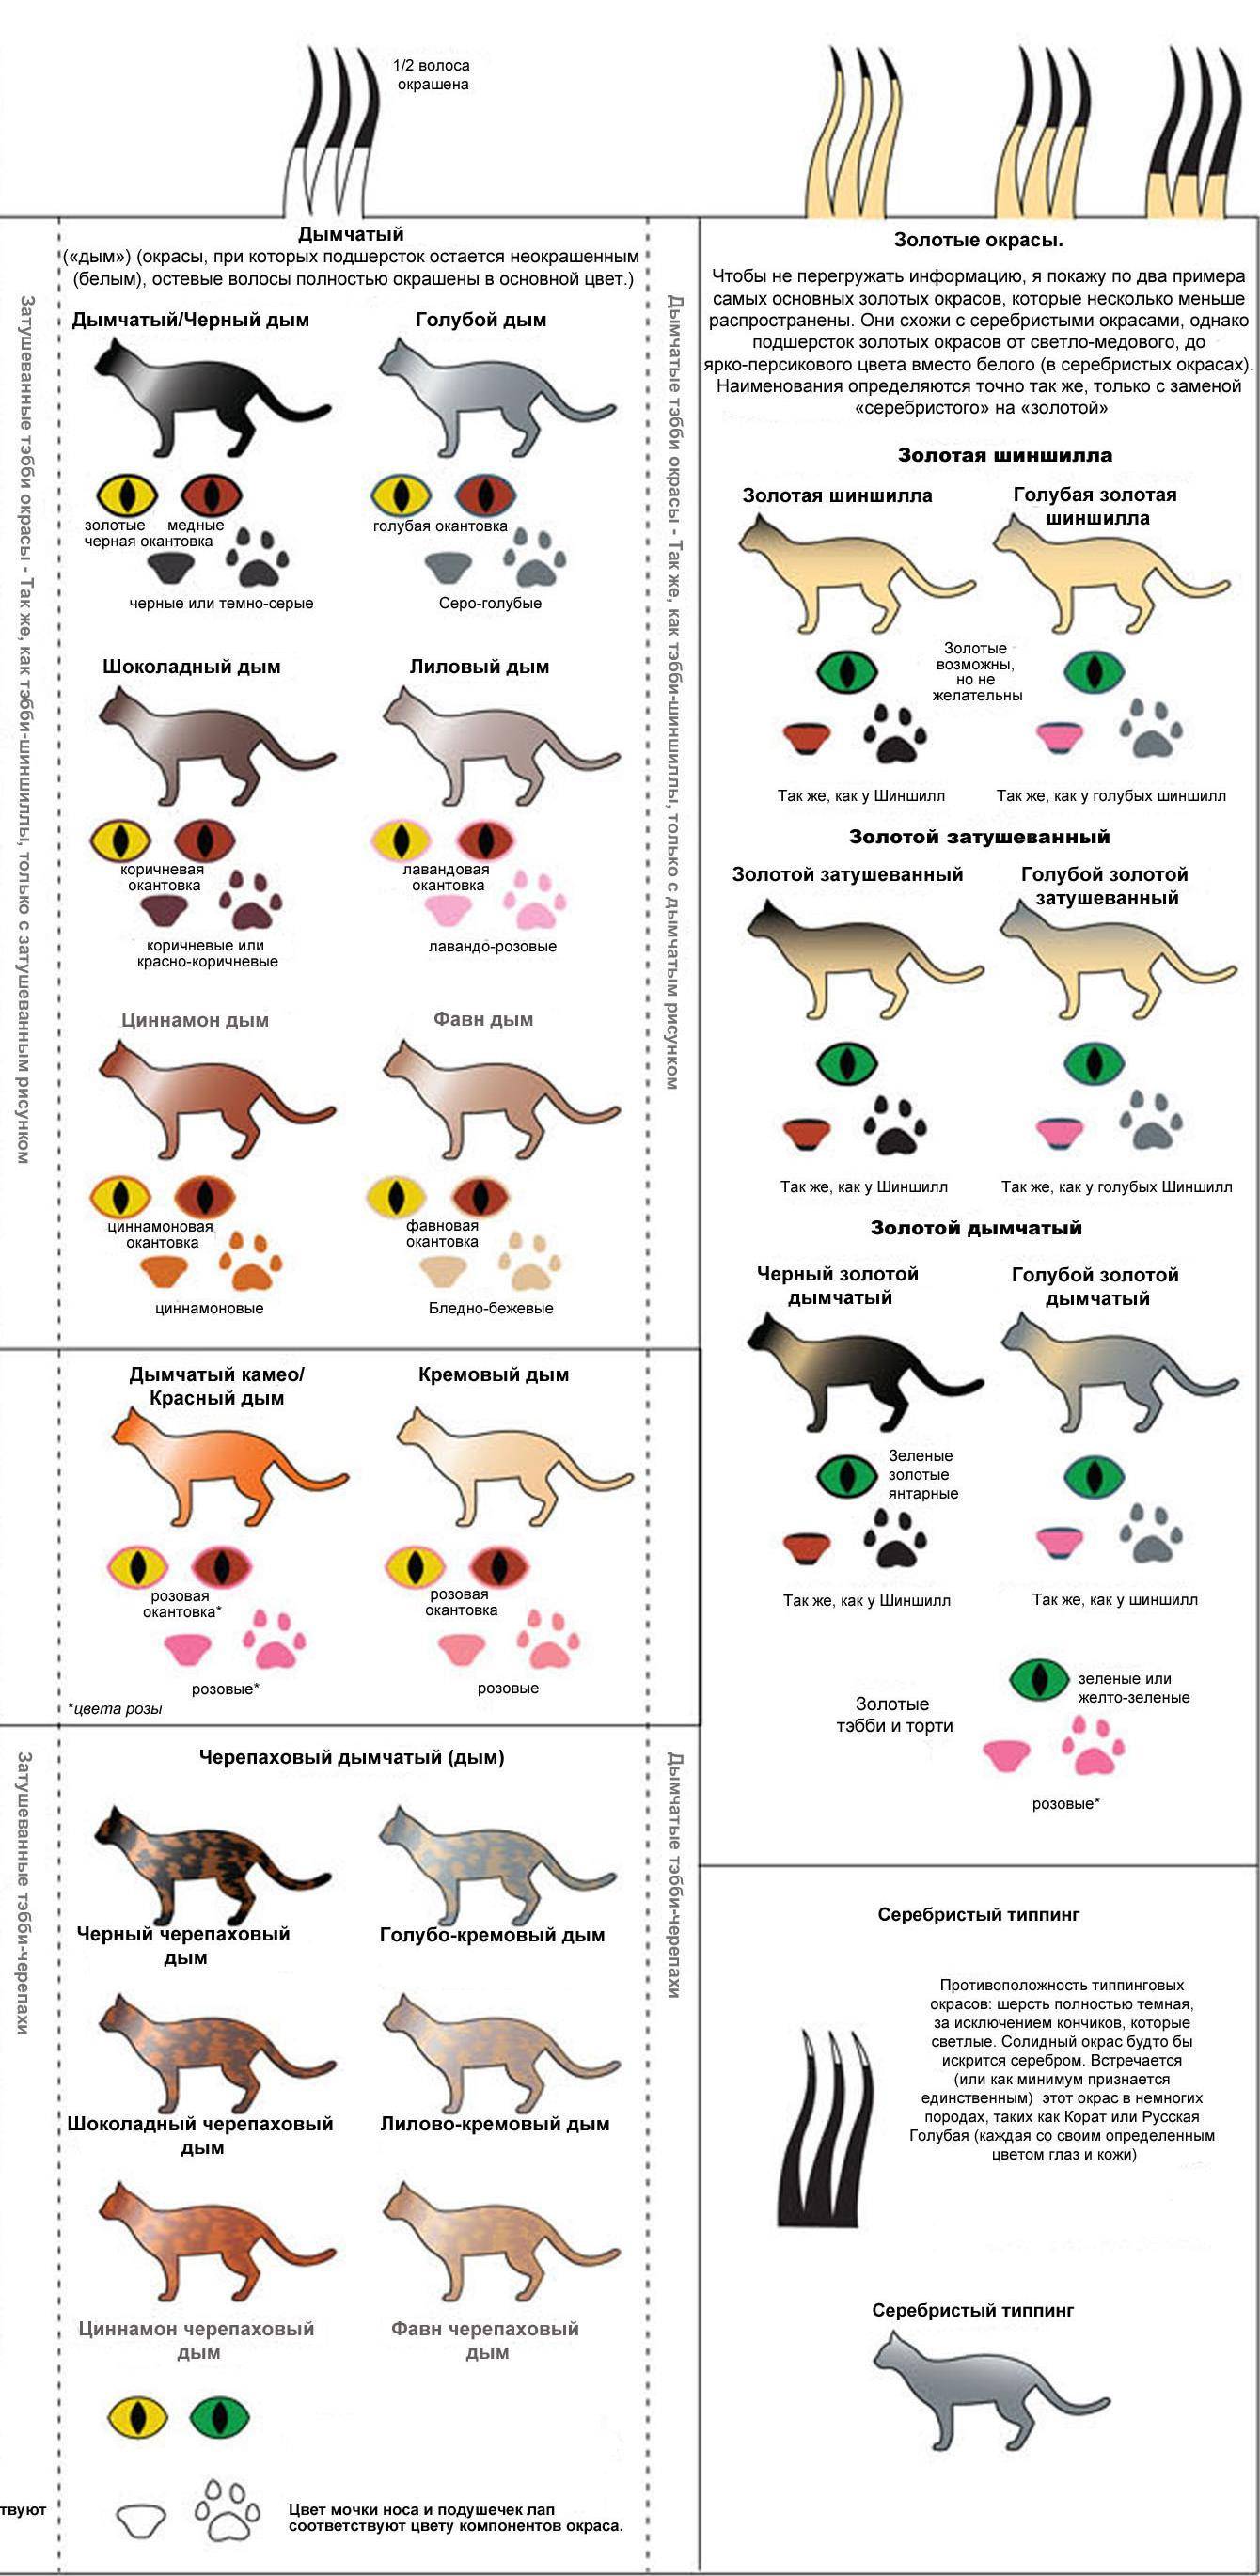 Окрас и тип шерсти кошек. Окрасы британцев таблица. Классификация окраса шотландских кошек. Окрасы британских кошек таблица обозначений. Генетика окрасов ориентальных кошек таблица.